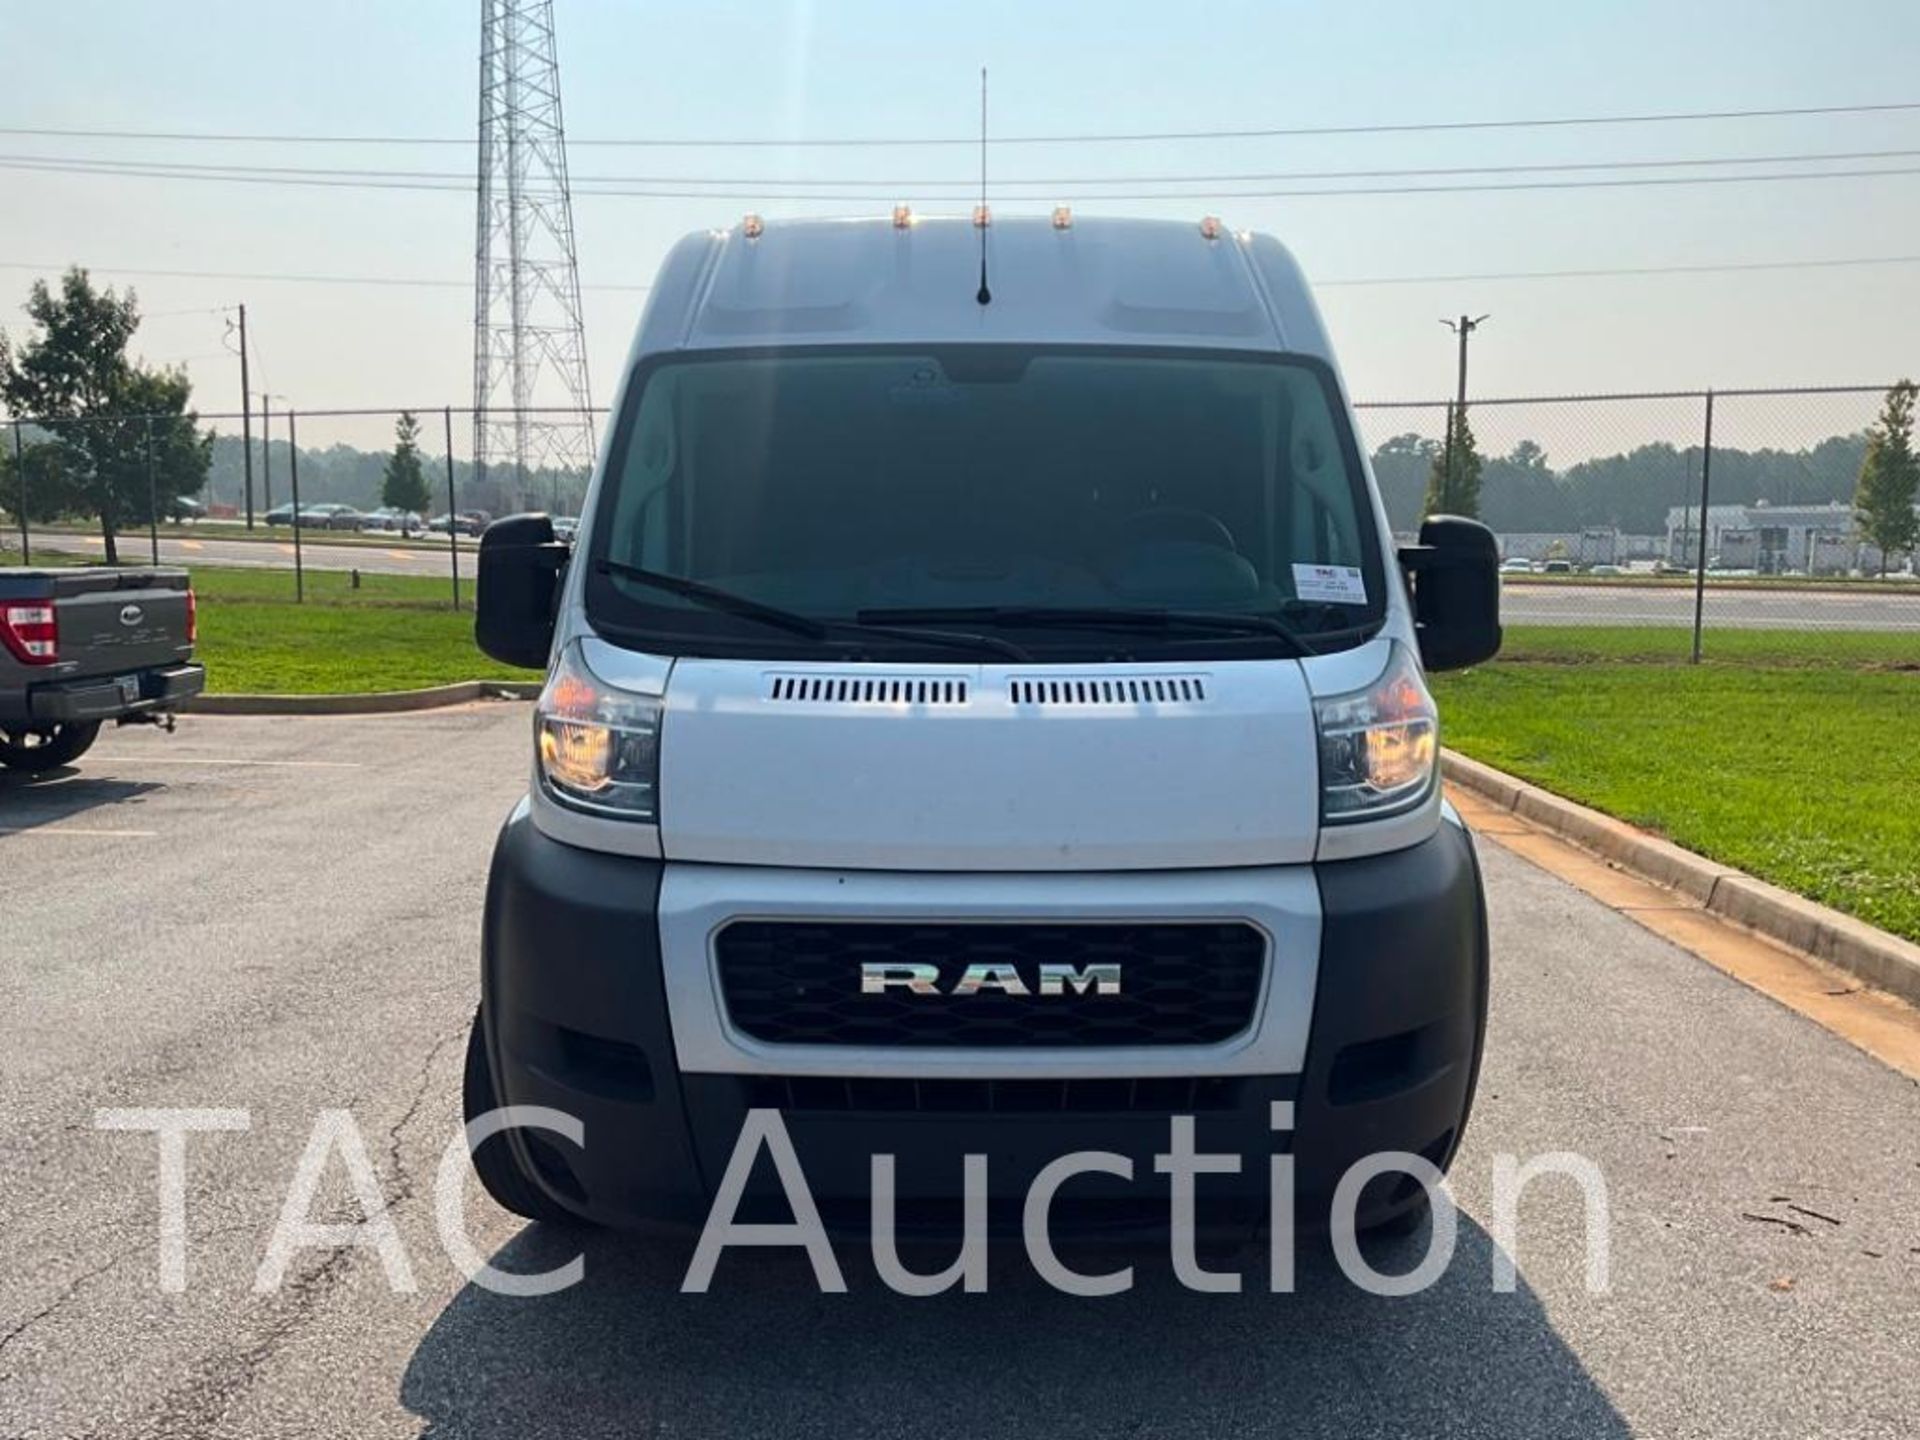 2021 Ram ProMaster 2500 Van - Image 8 of 47